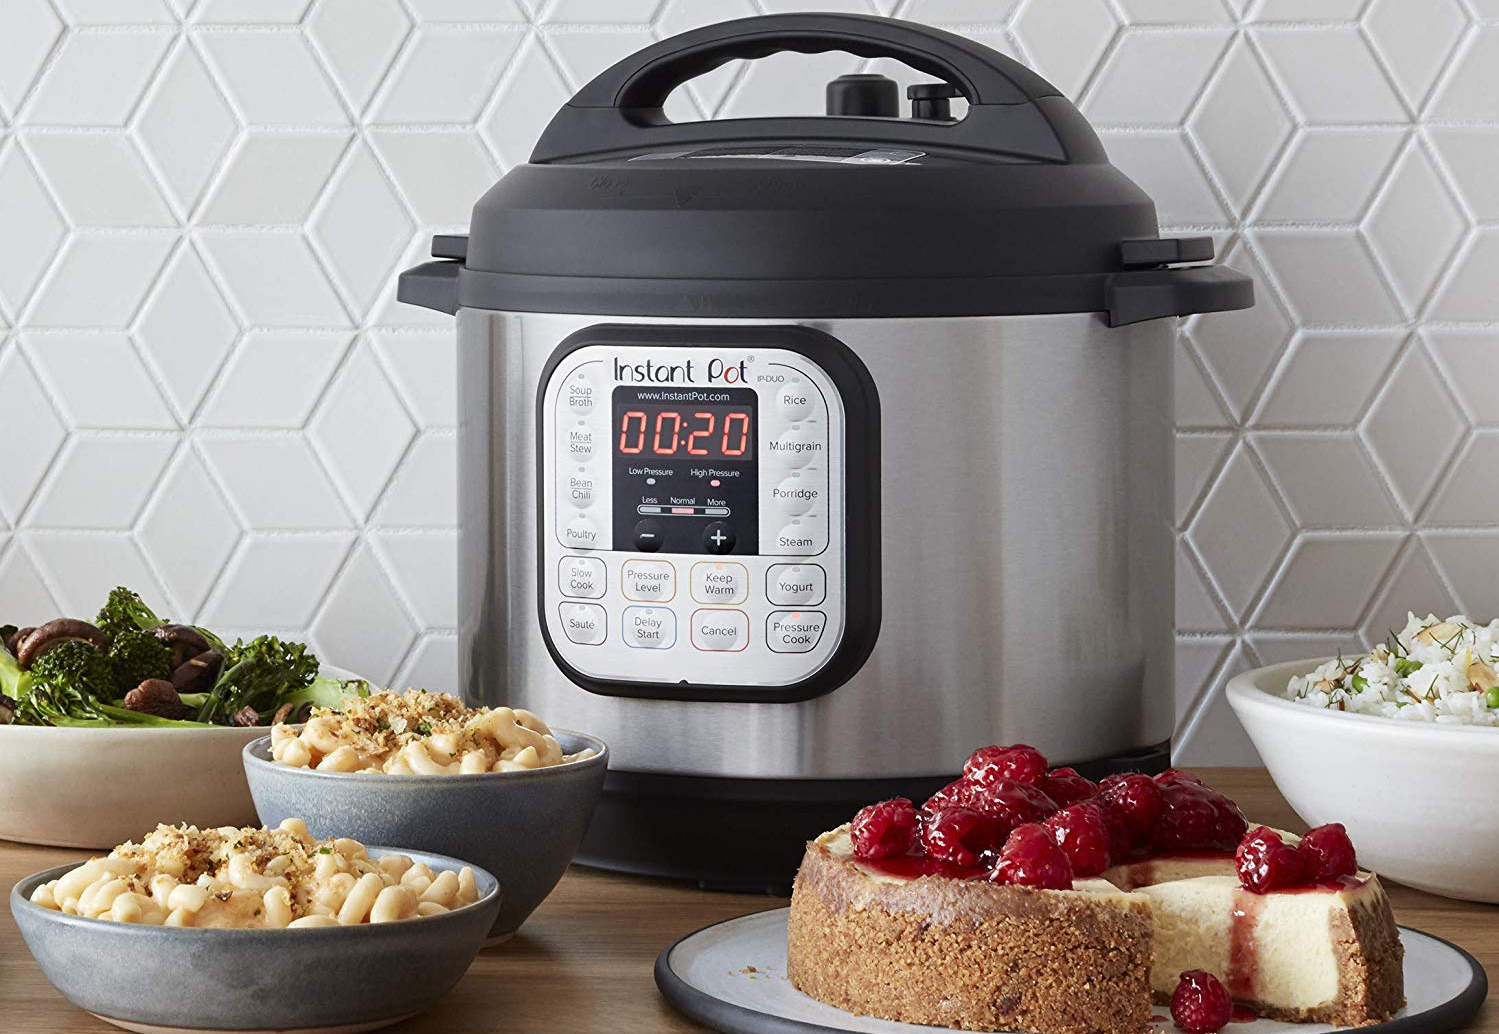 https://www.digitaltrends.com/wp-content/uploads/2019/12/instant-pot-duo-80-7-in-1-electric-pressure-cooker-1.jpg?p=1